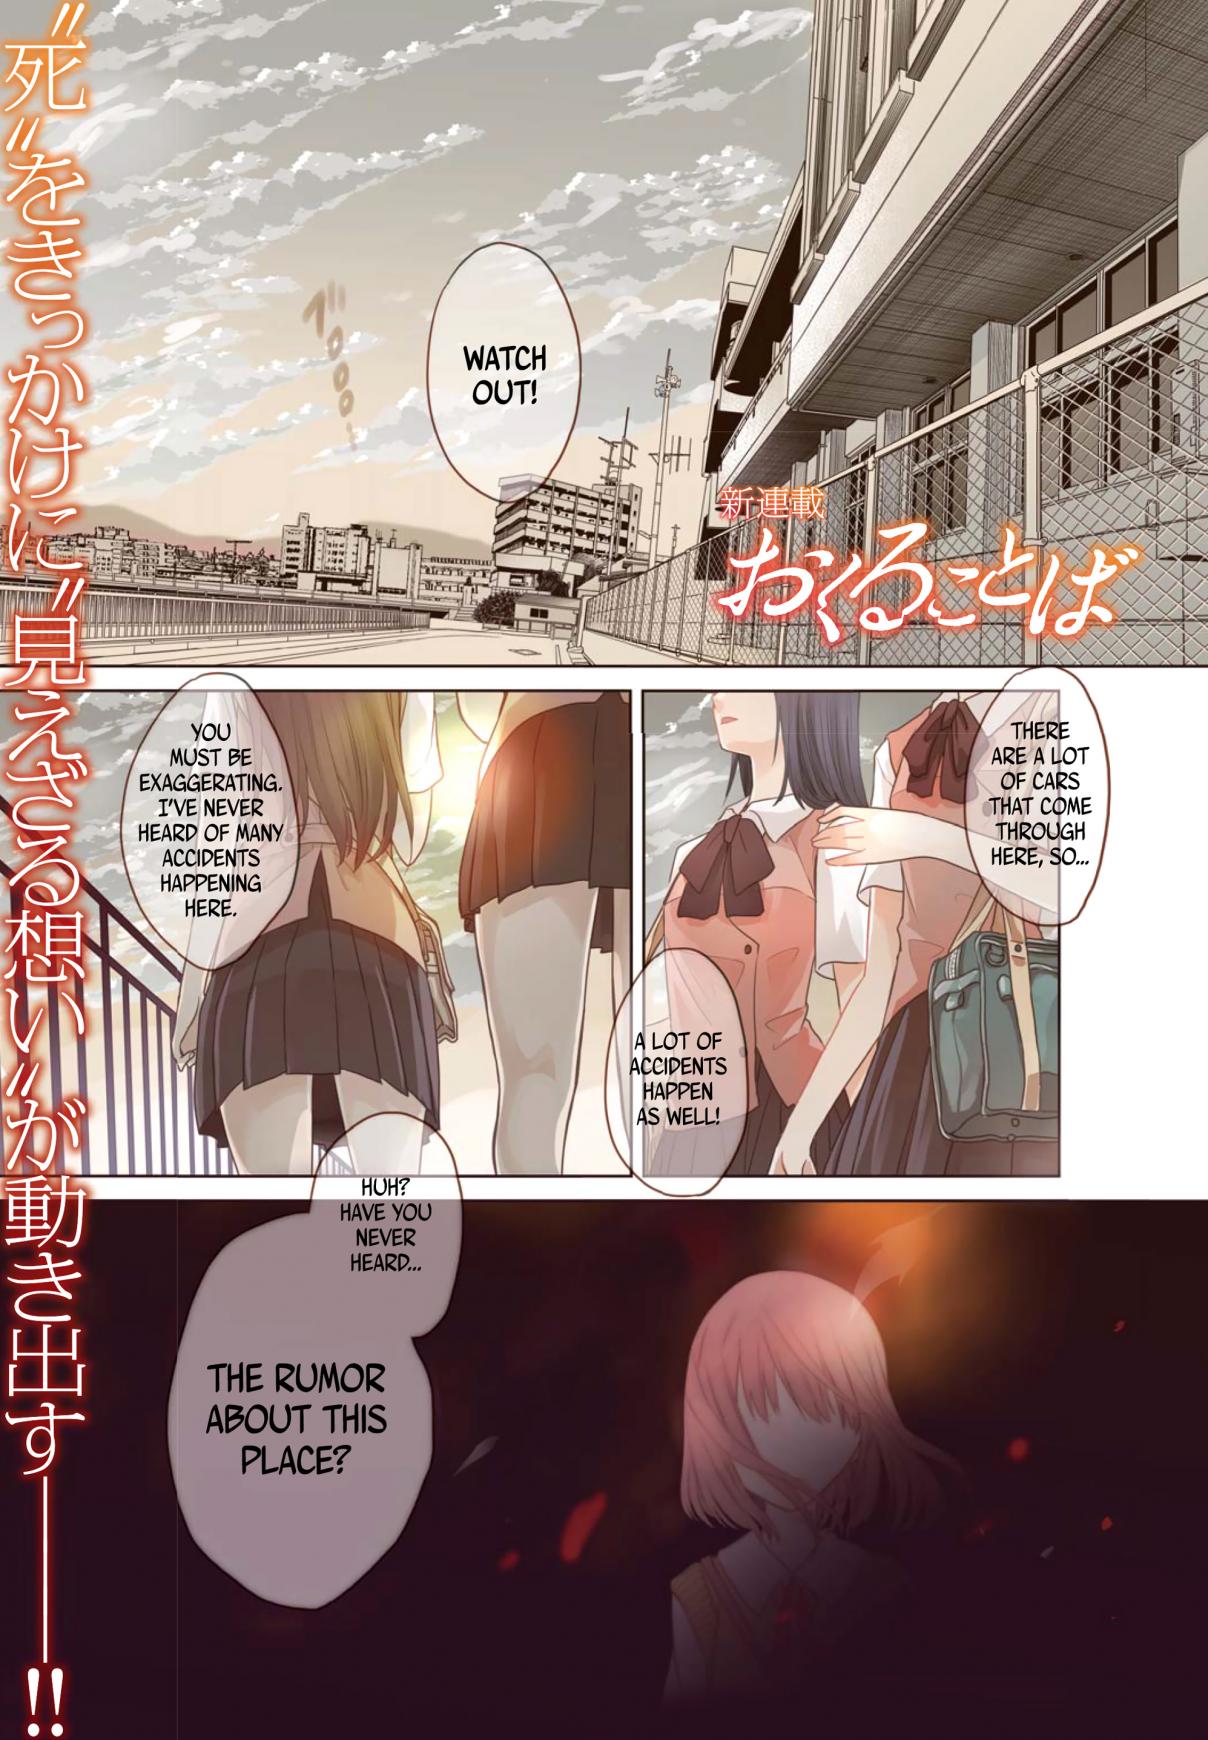 Okuru Kotoba Vol. 1 Ch. 1 The End and the Beginning